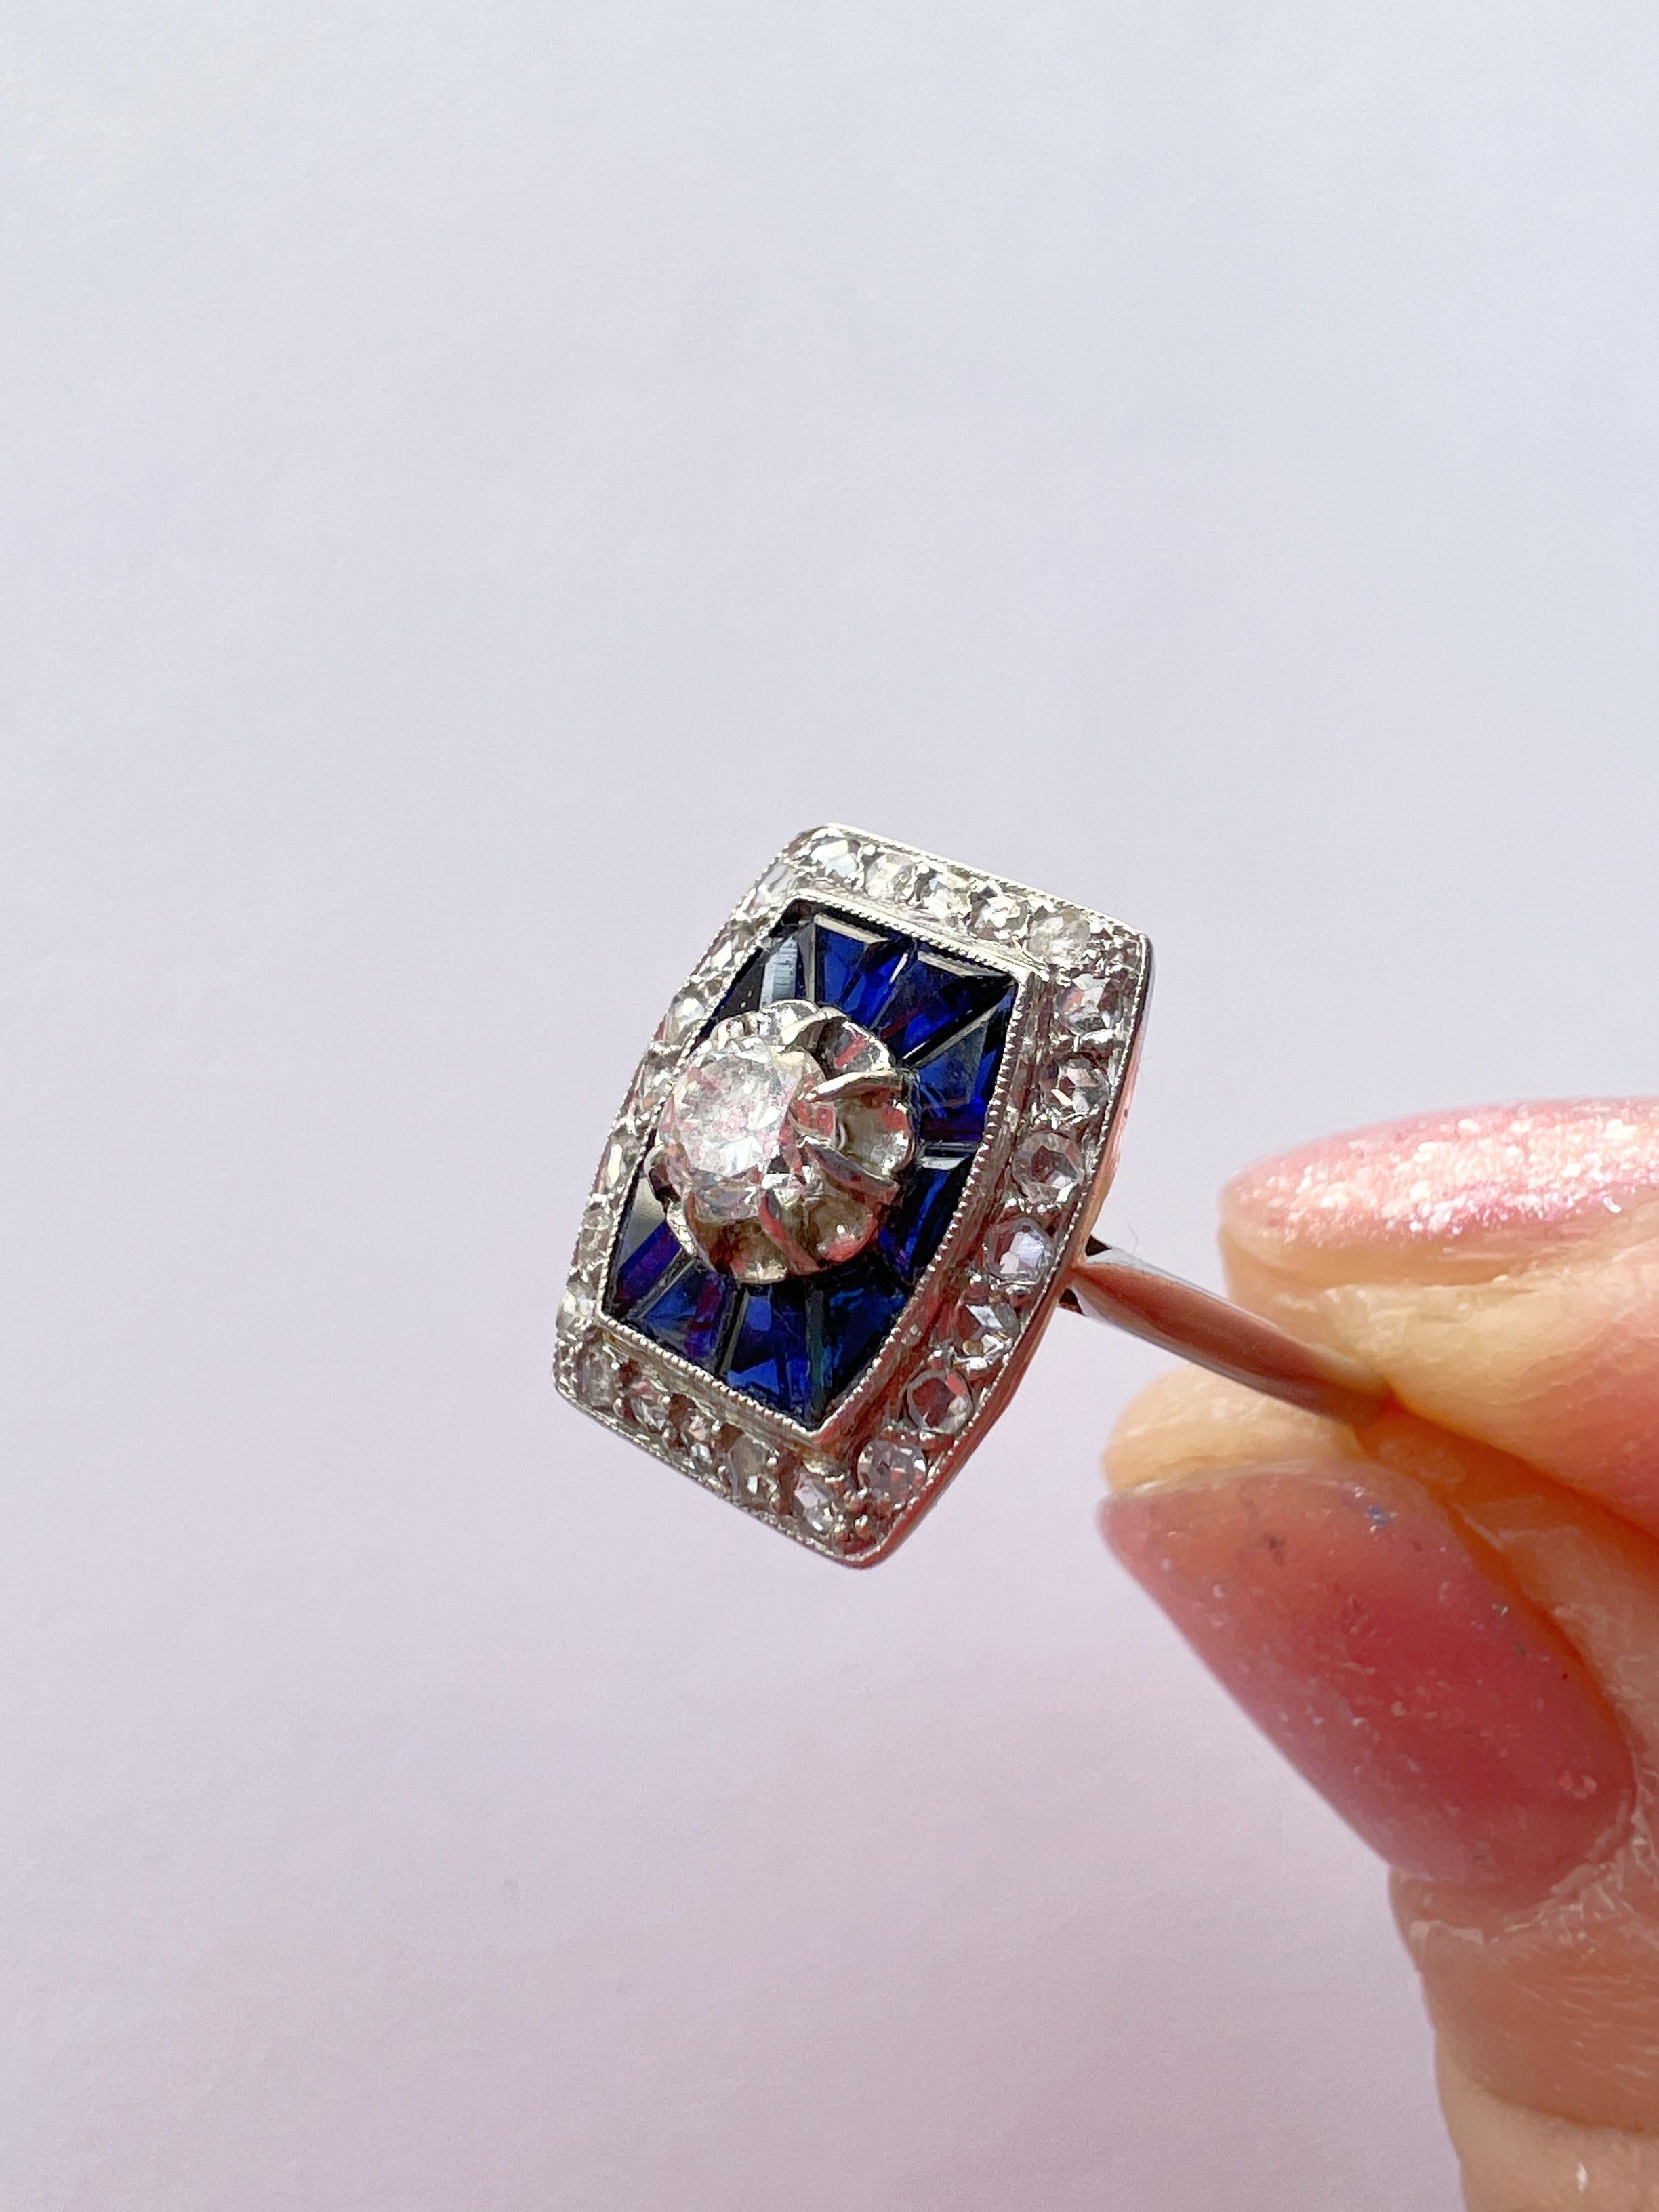 French Art Deco Era 18k White Gold Diamond Blue Sapphire Ring 1